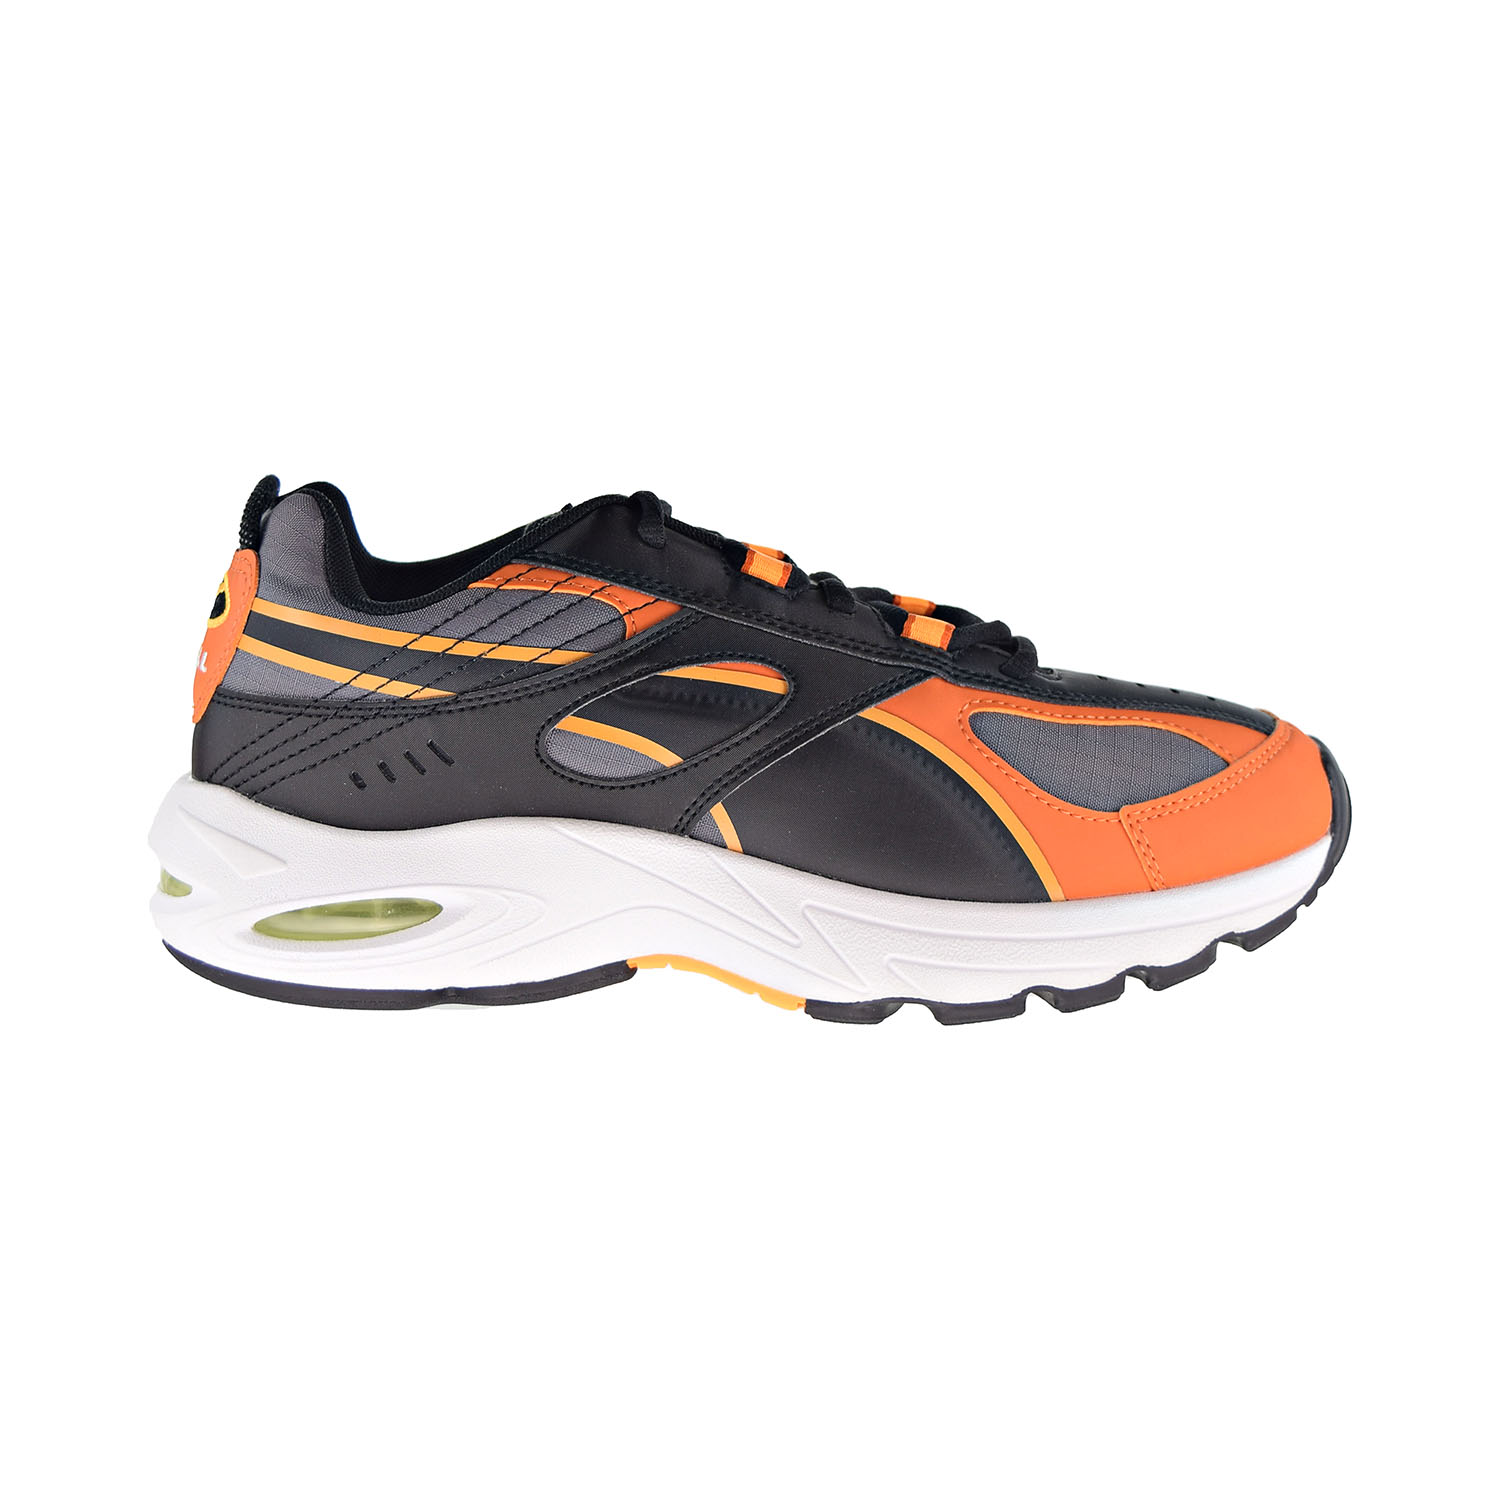 Shoes Puma Black-Jaffa Orange 371826-02 